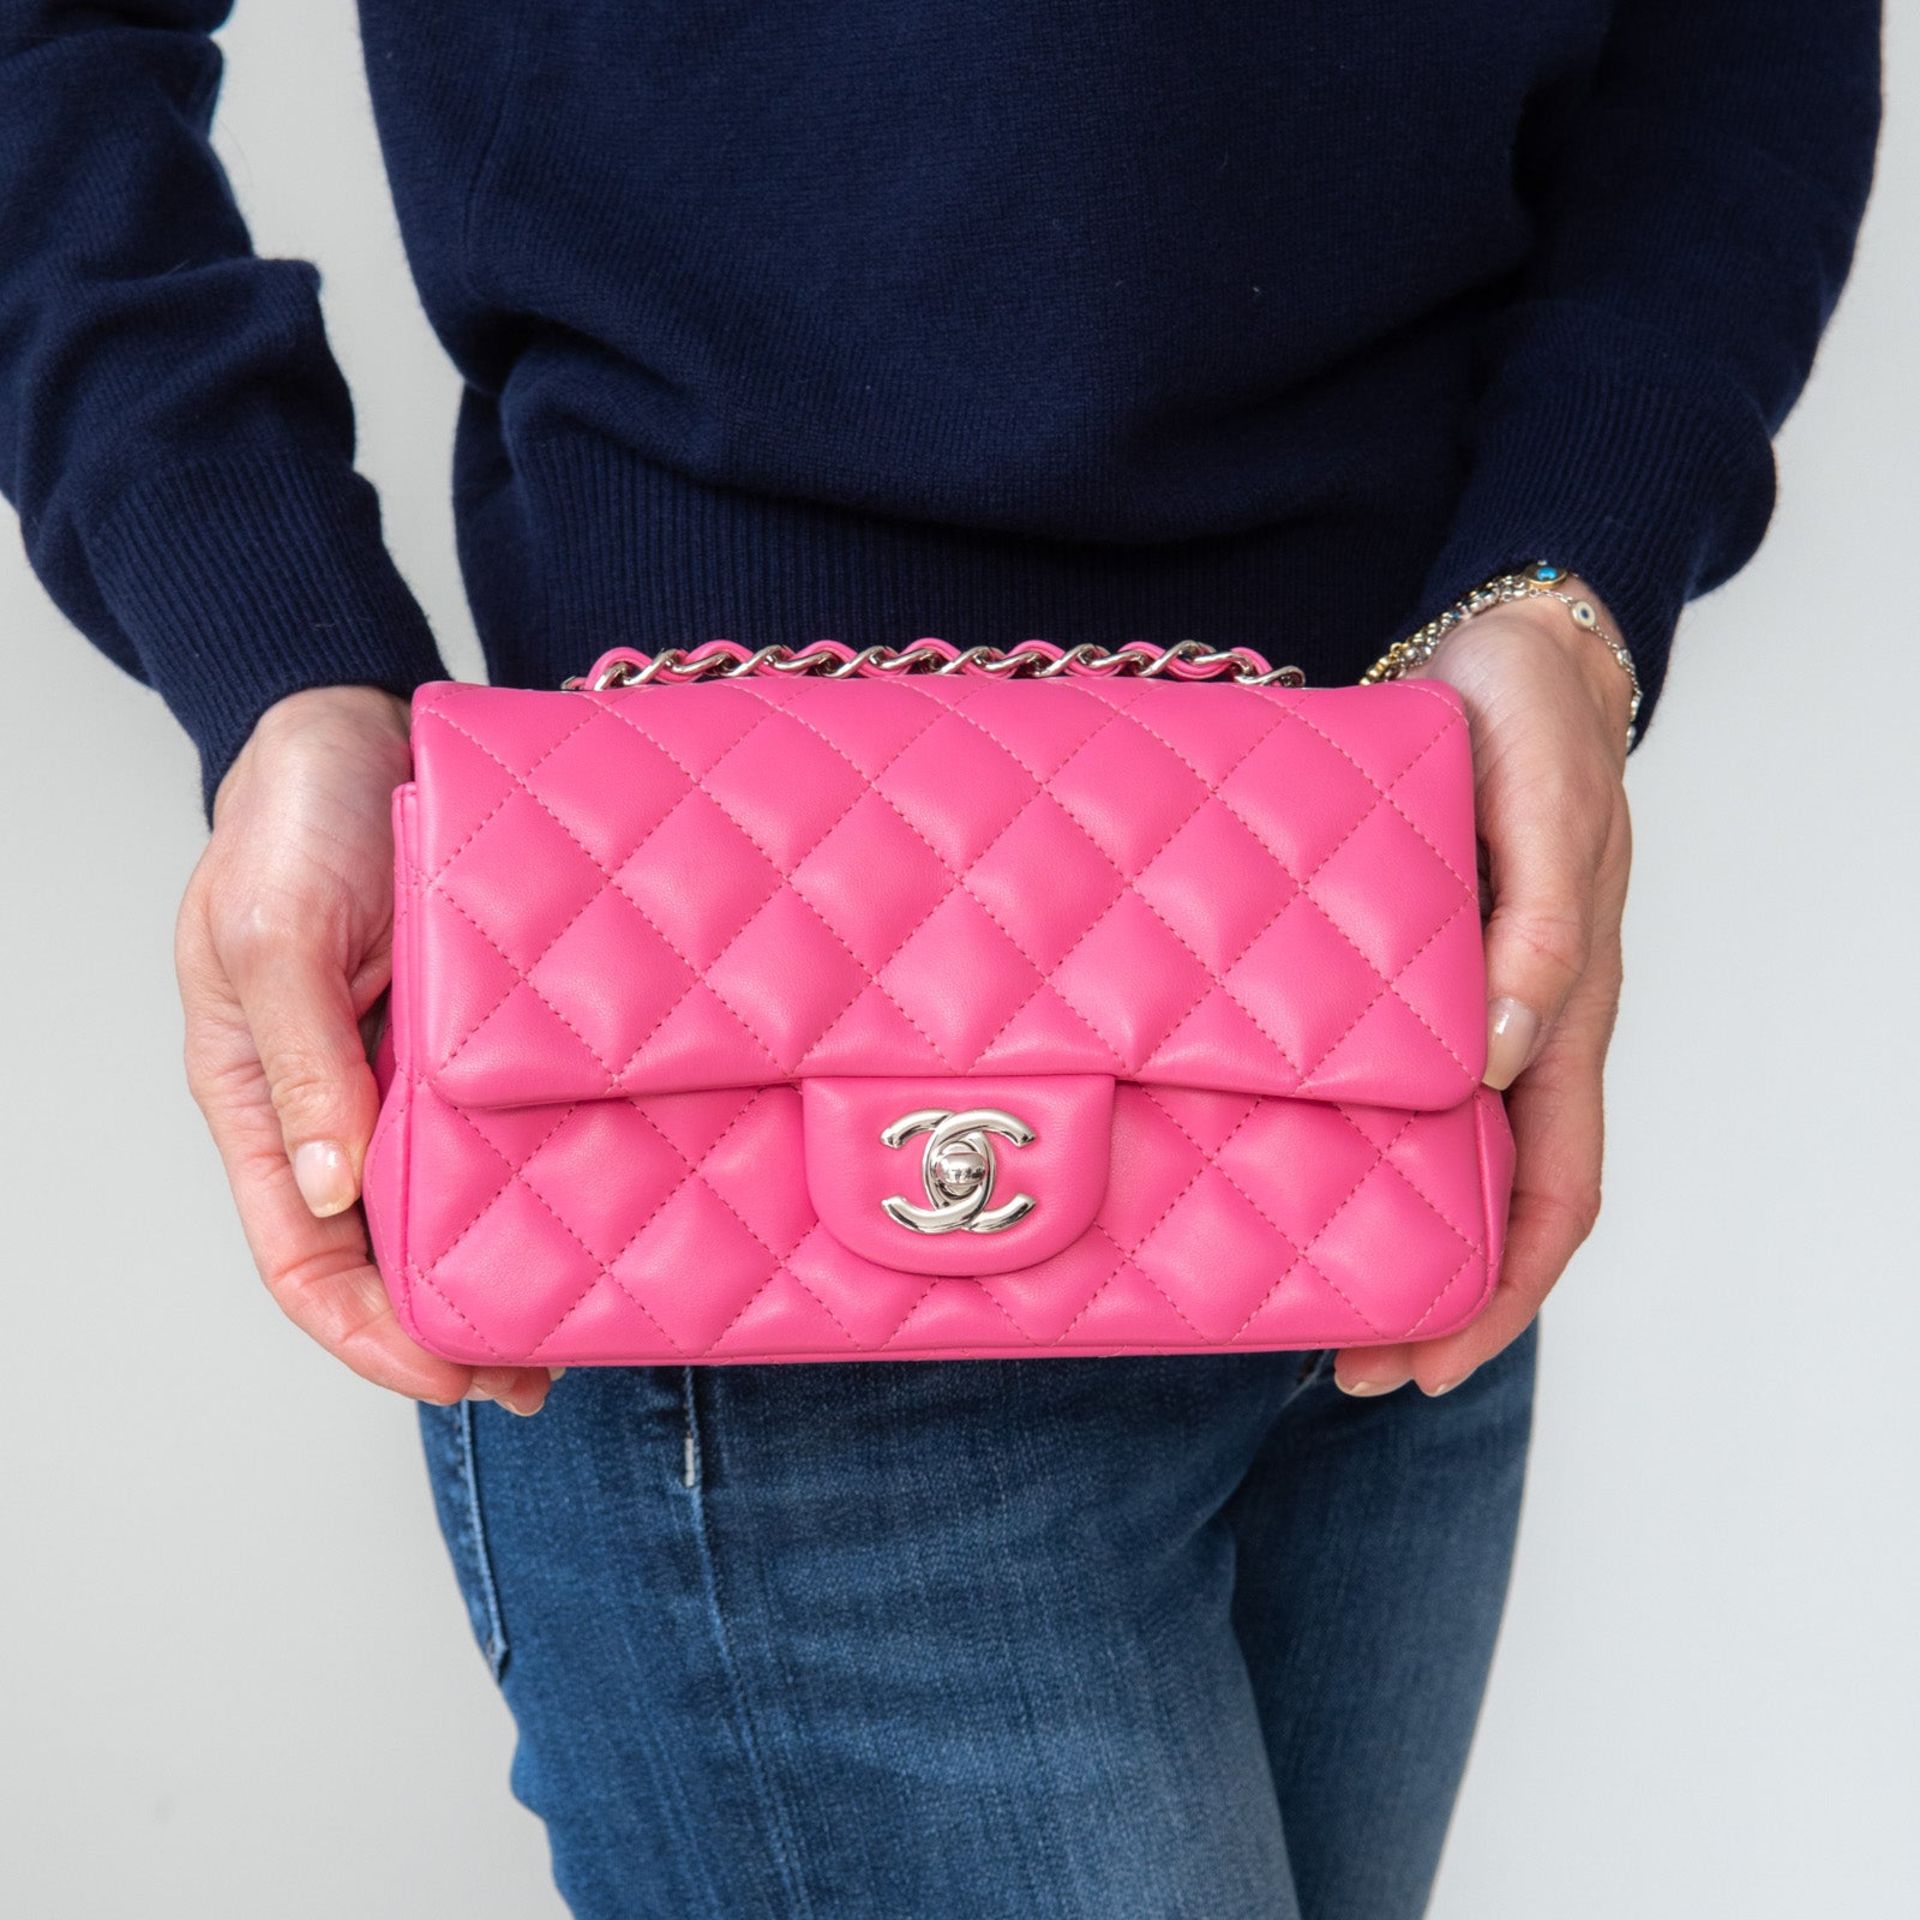 Chanel Pink Mini Rectangular Flap Bag - Image 10 of 13